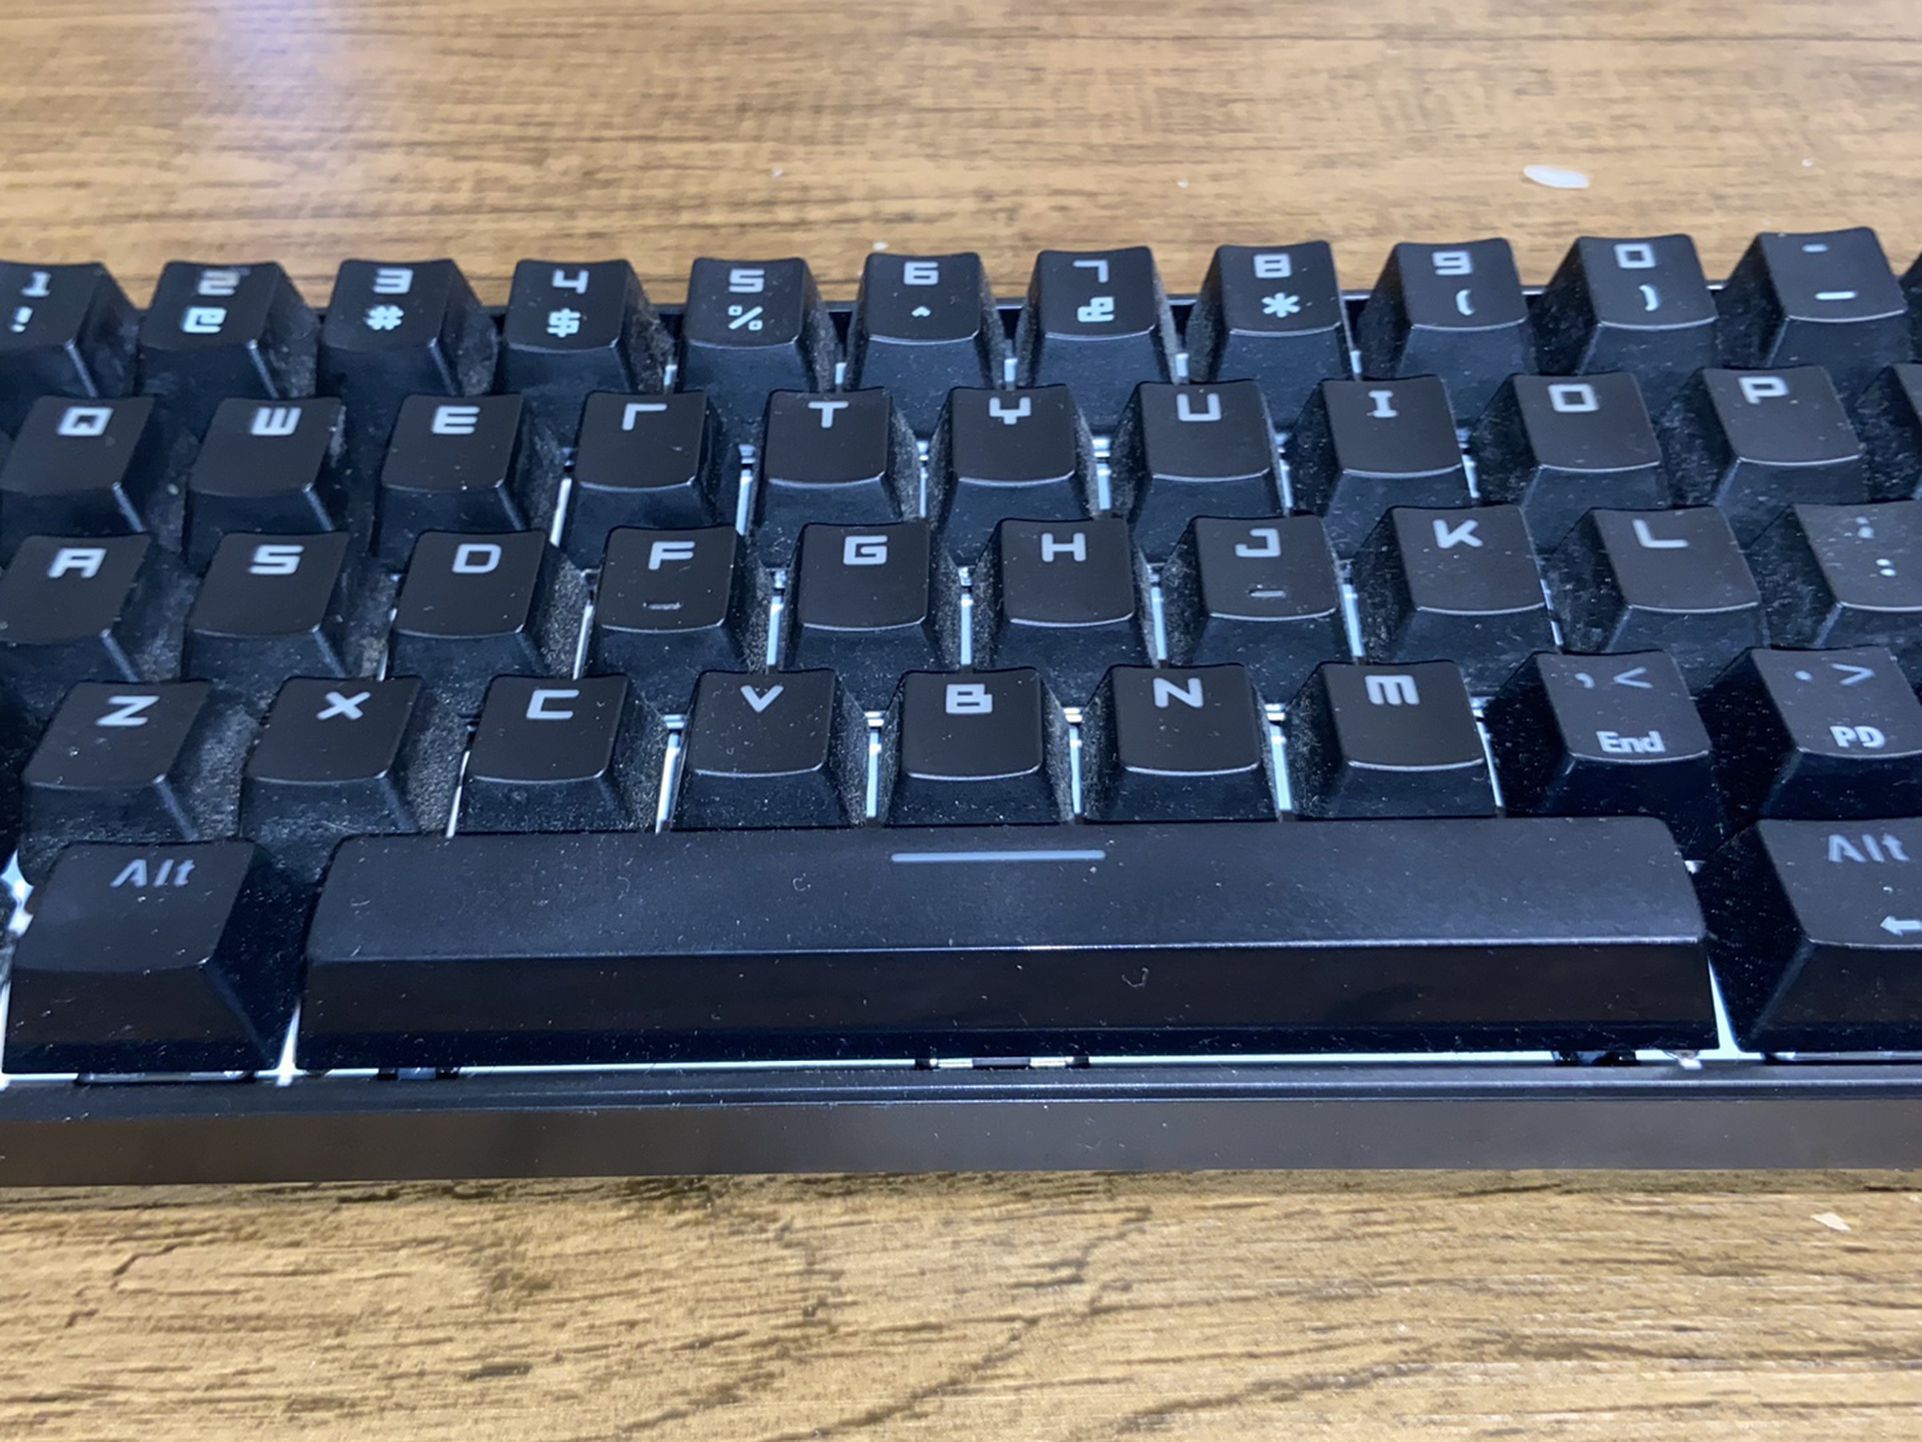 60% Keyboard Yellow Switch’s Fastest Key Board